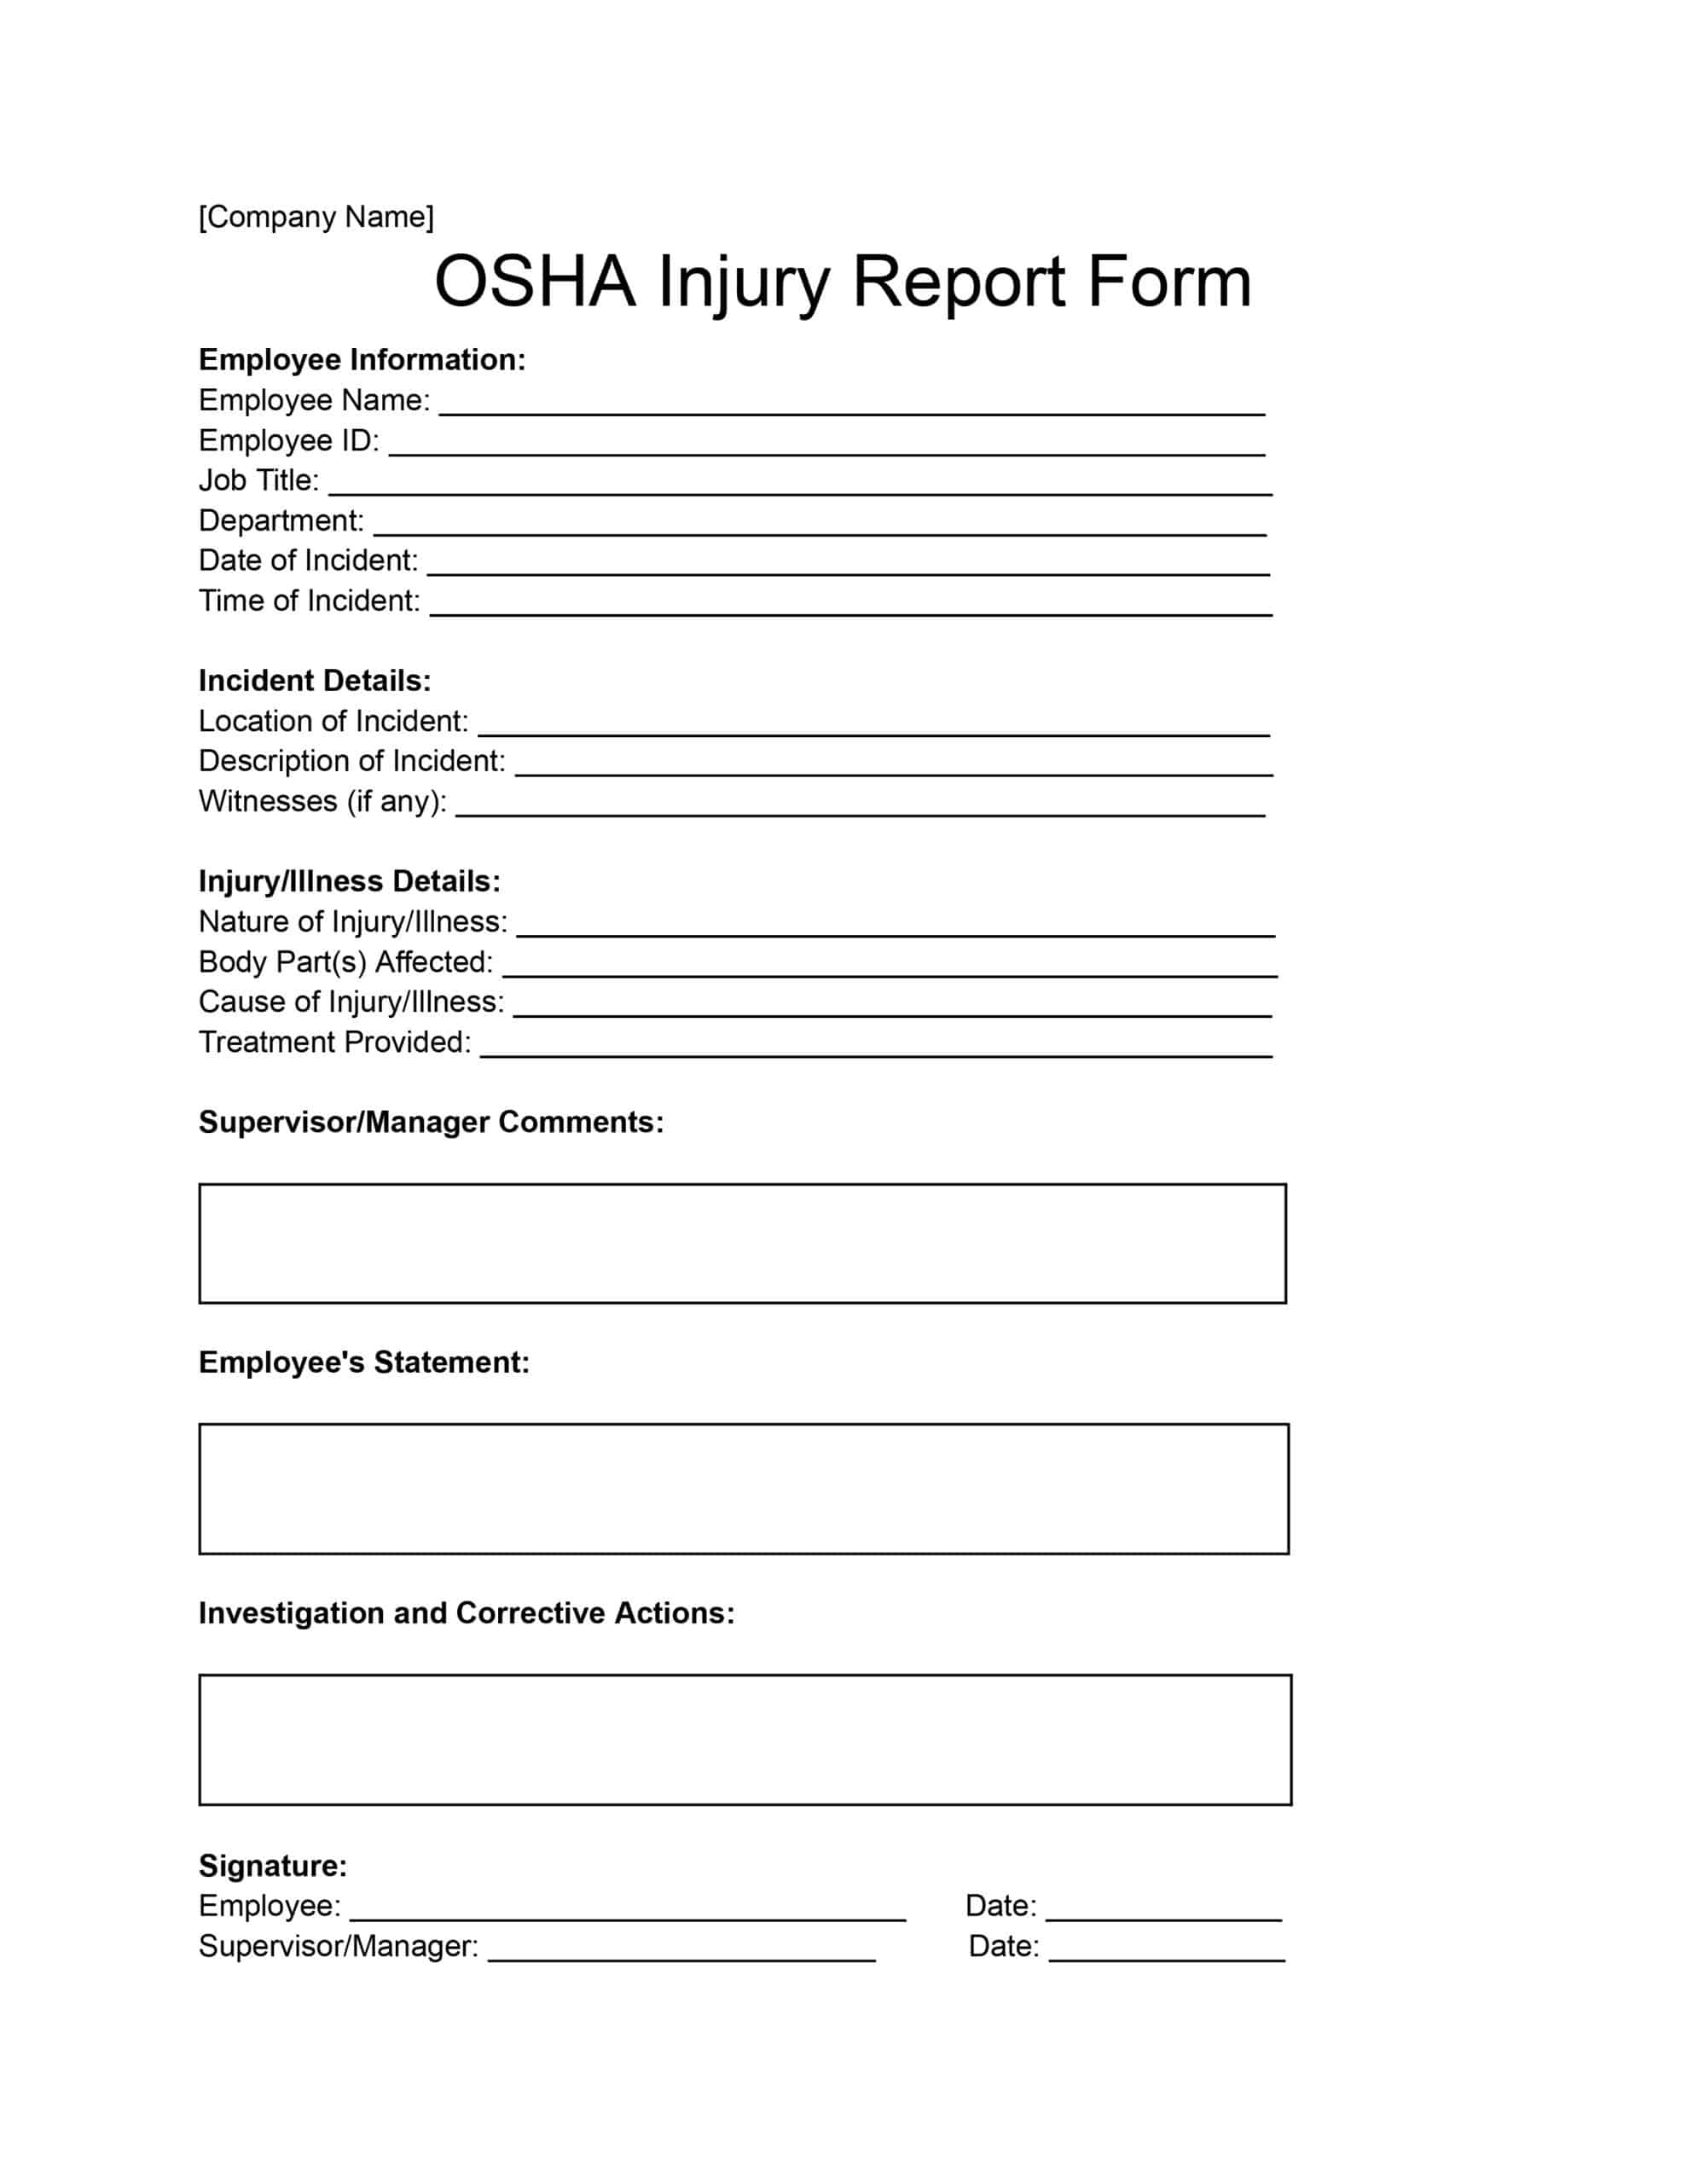 OSHA Injury Report Form